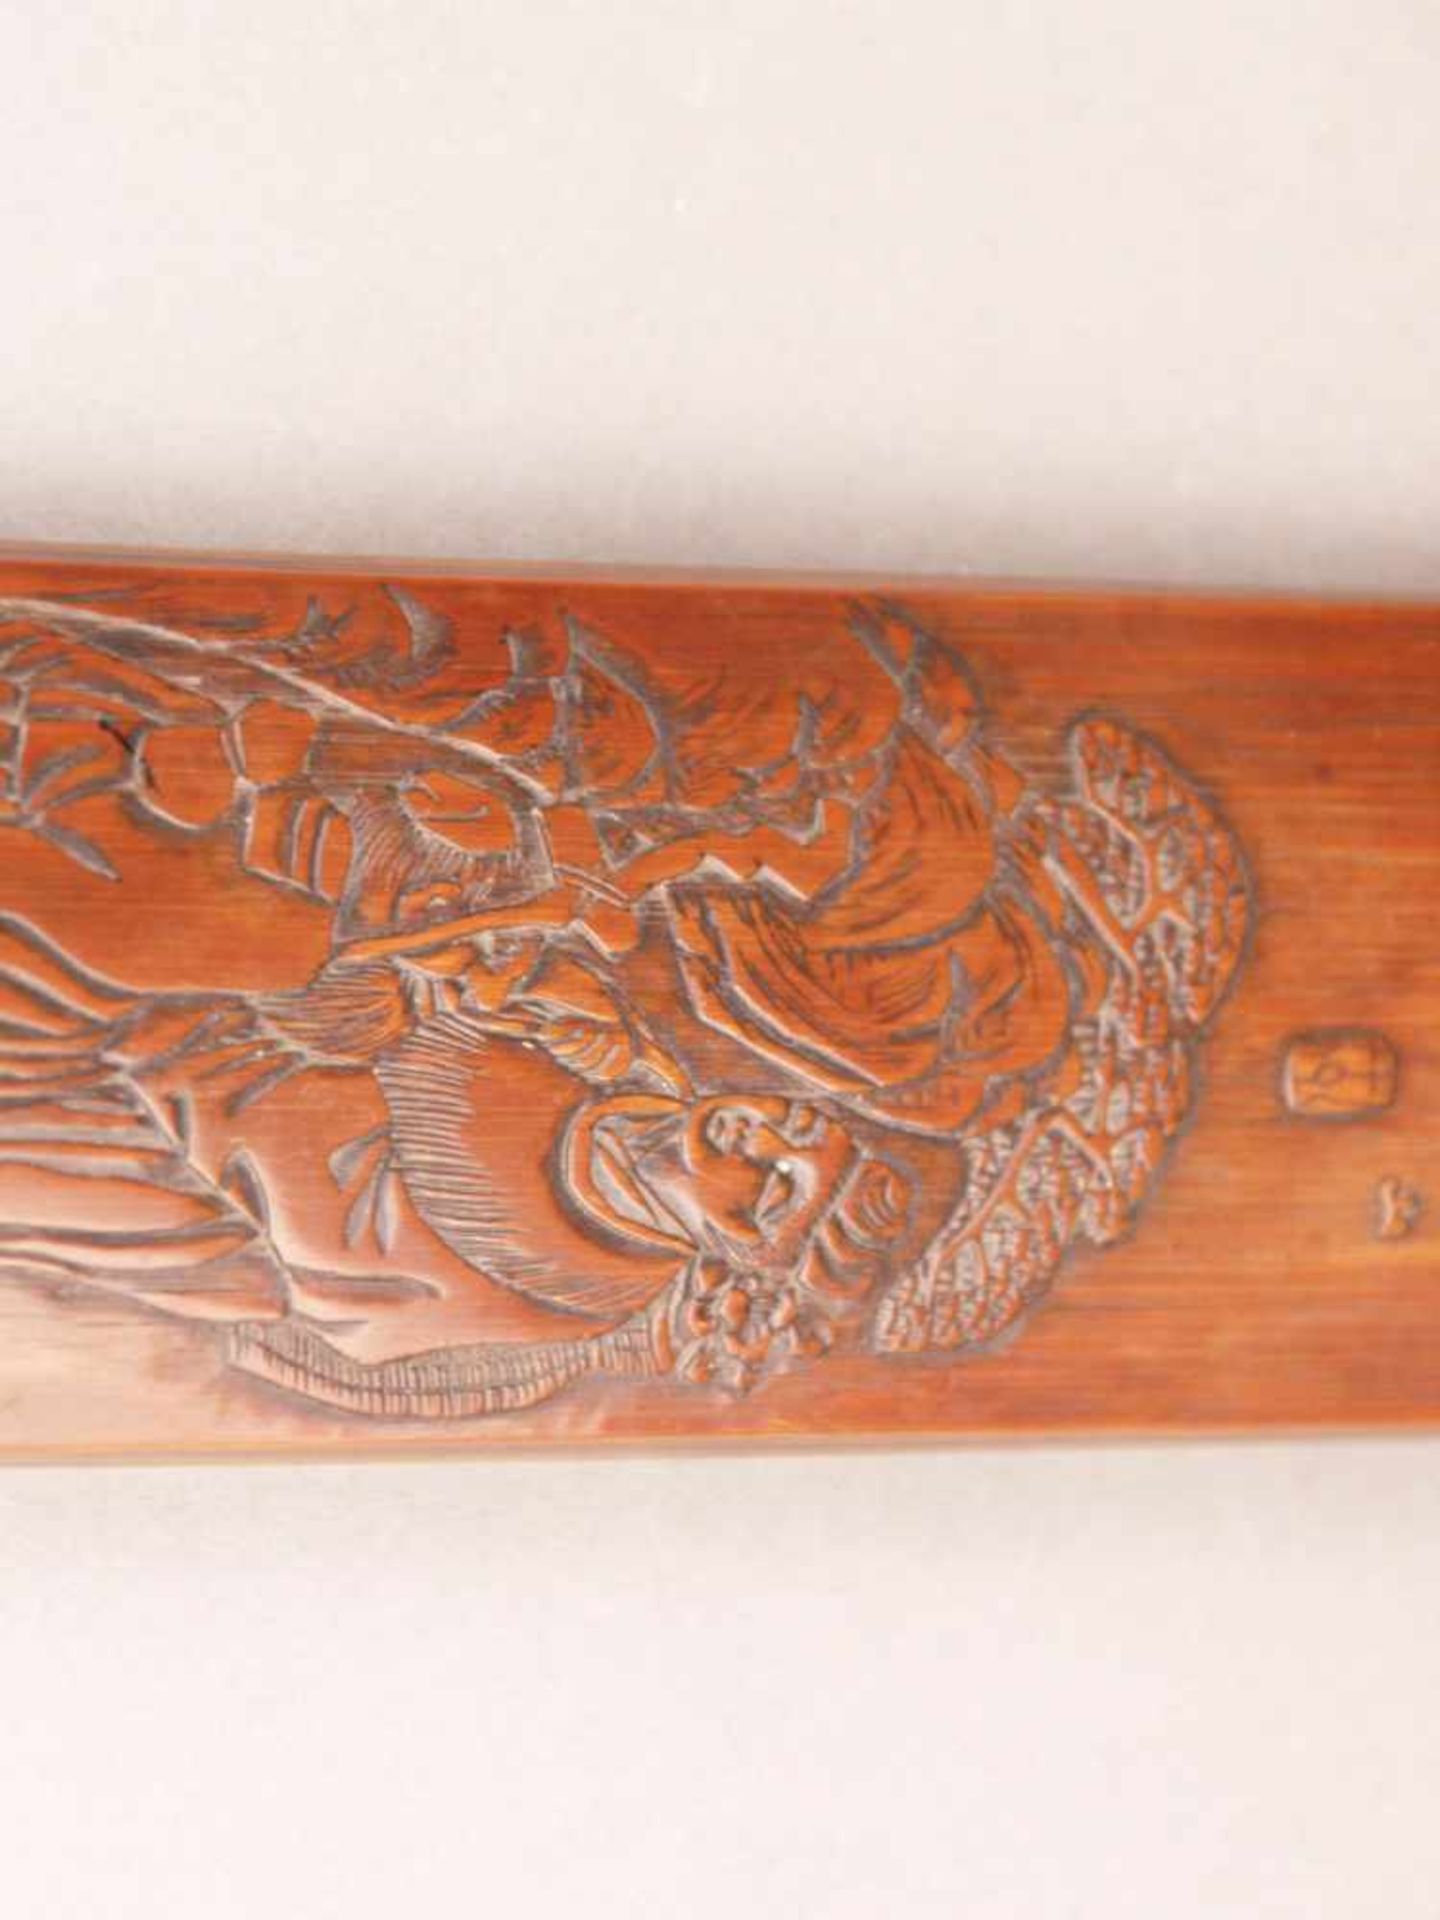 Zwei Handstützen - China, Qing-Dynastie, 18./19.Jh., konvexe längliche Form, Bambusholz fein - Bild 2 aus 8